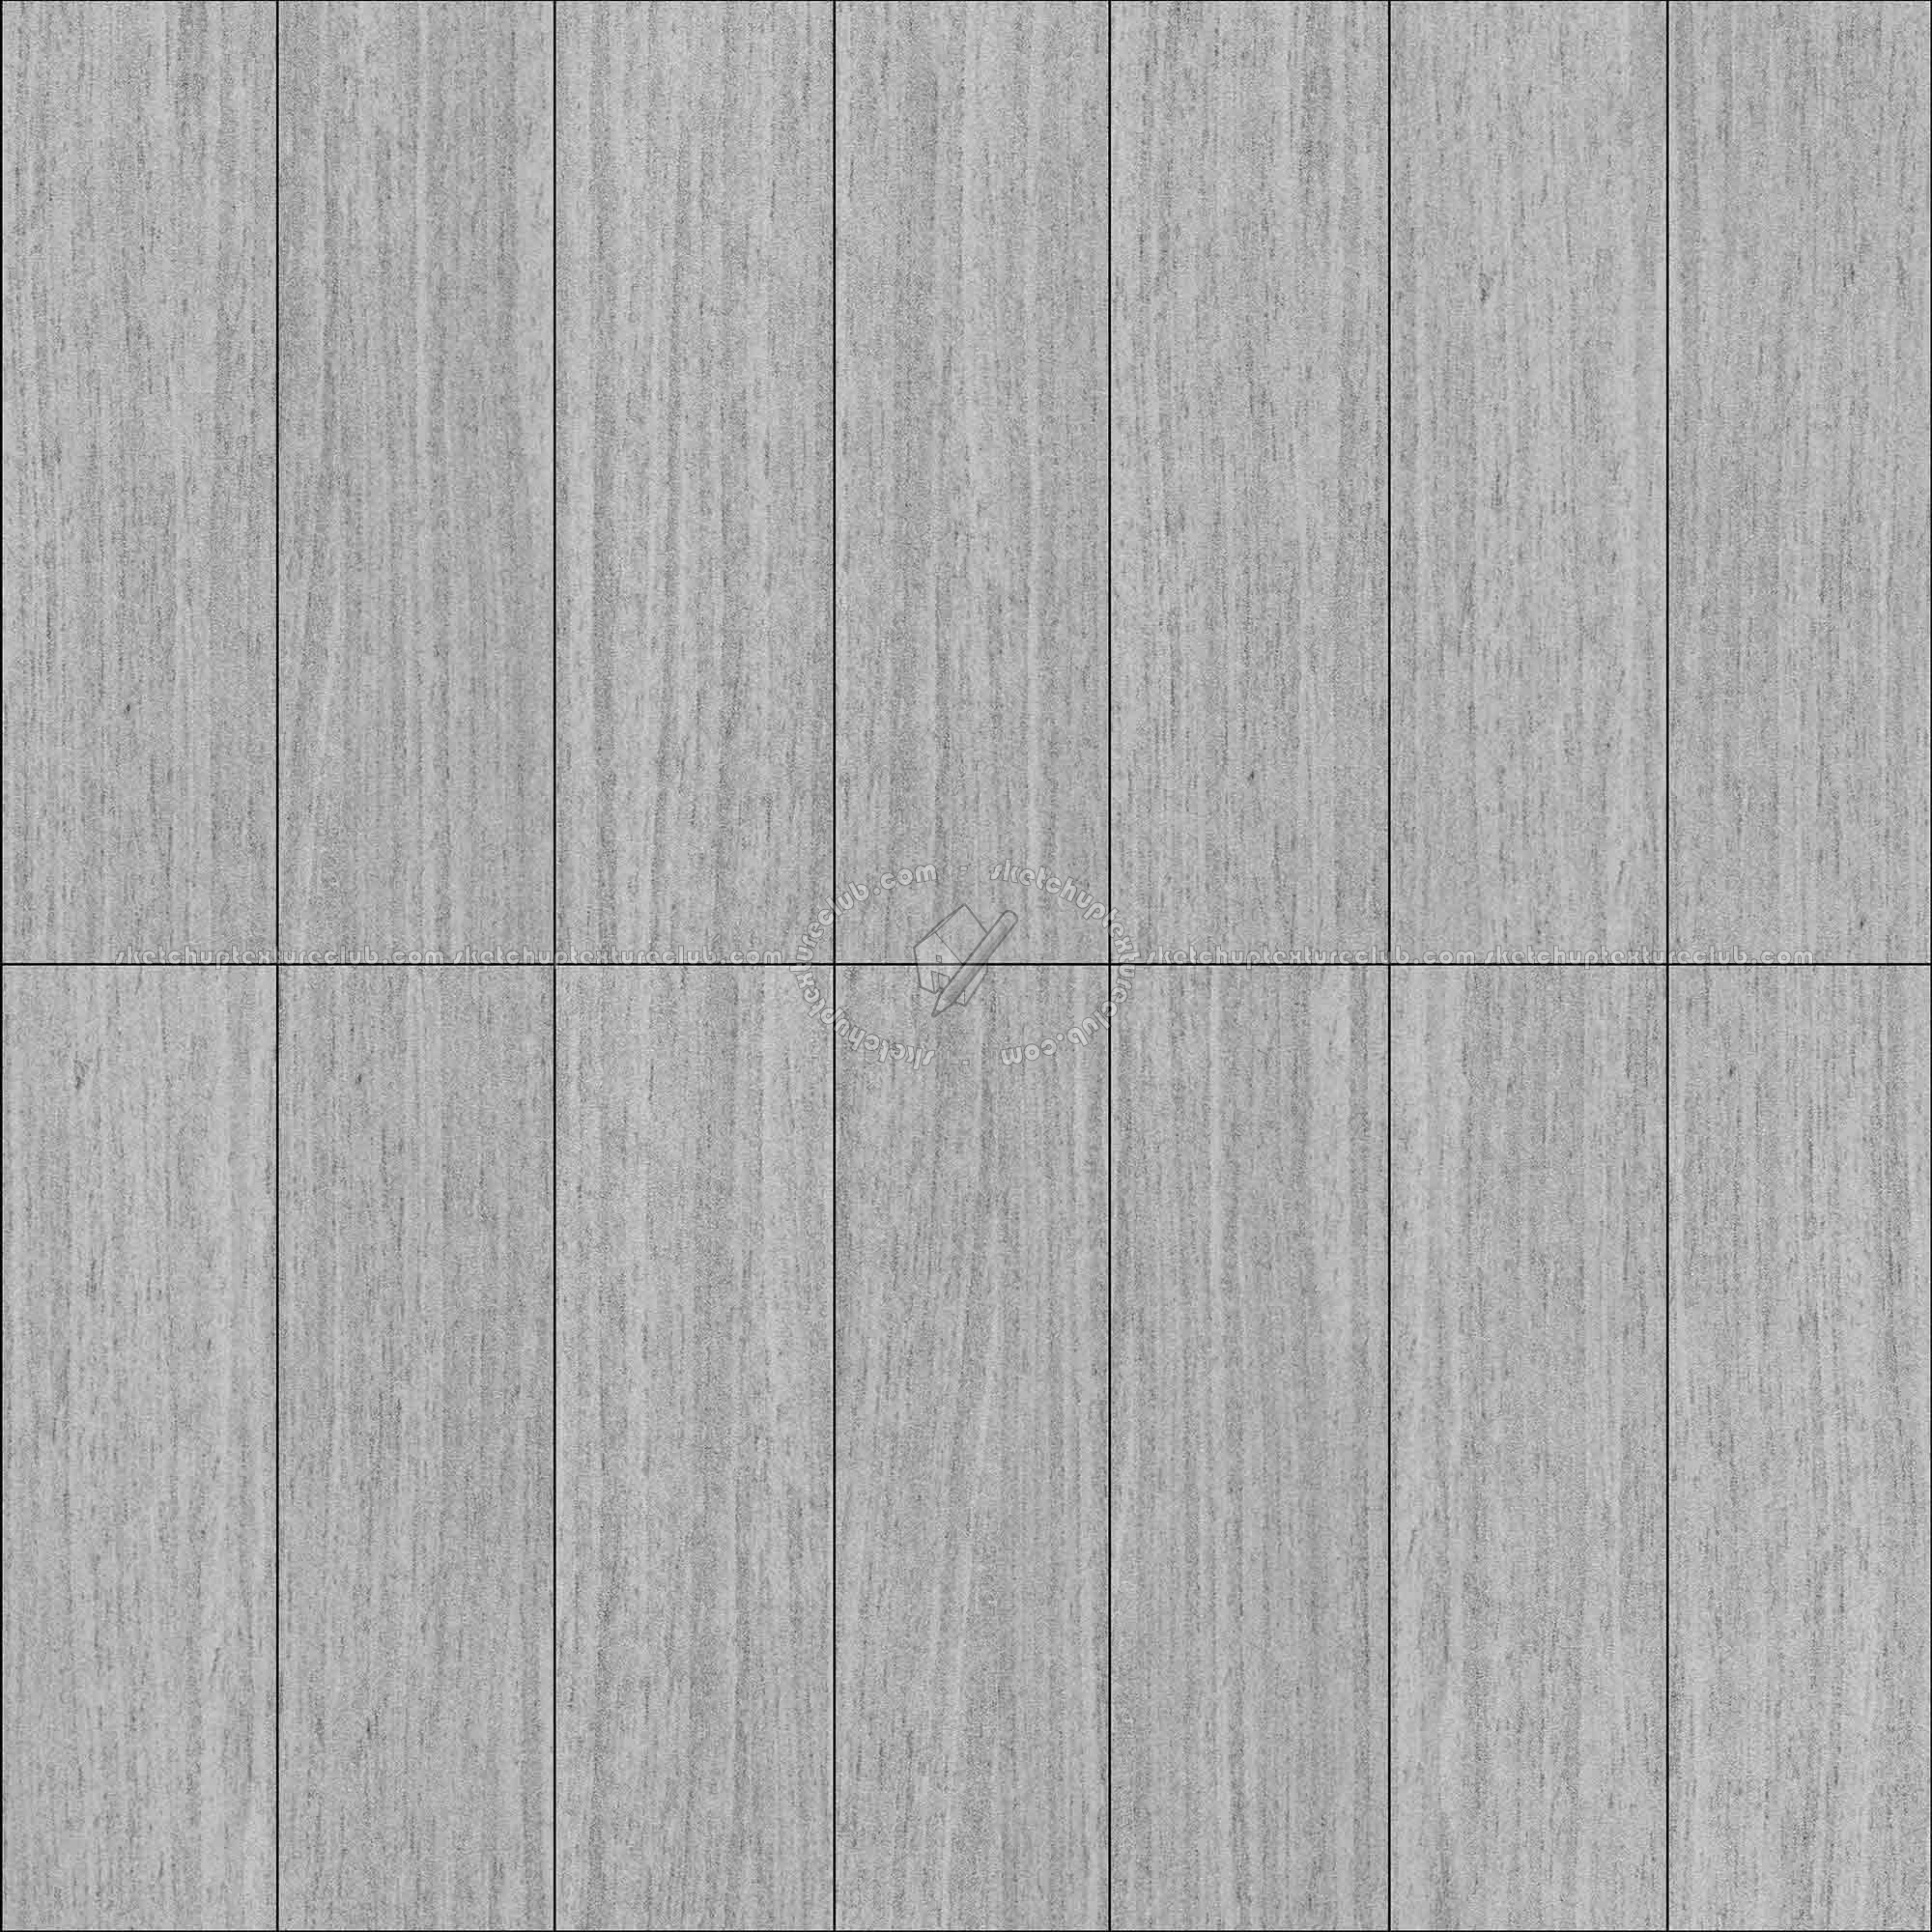 Design industry rectangular tile texture seamless 14080